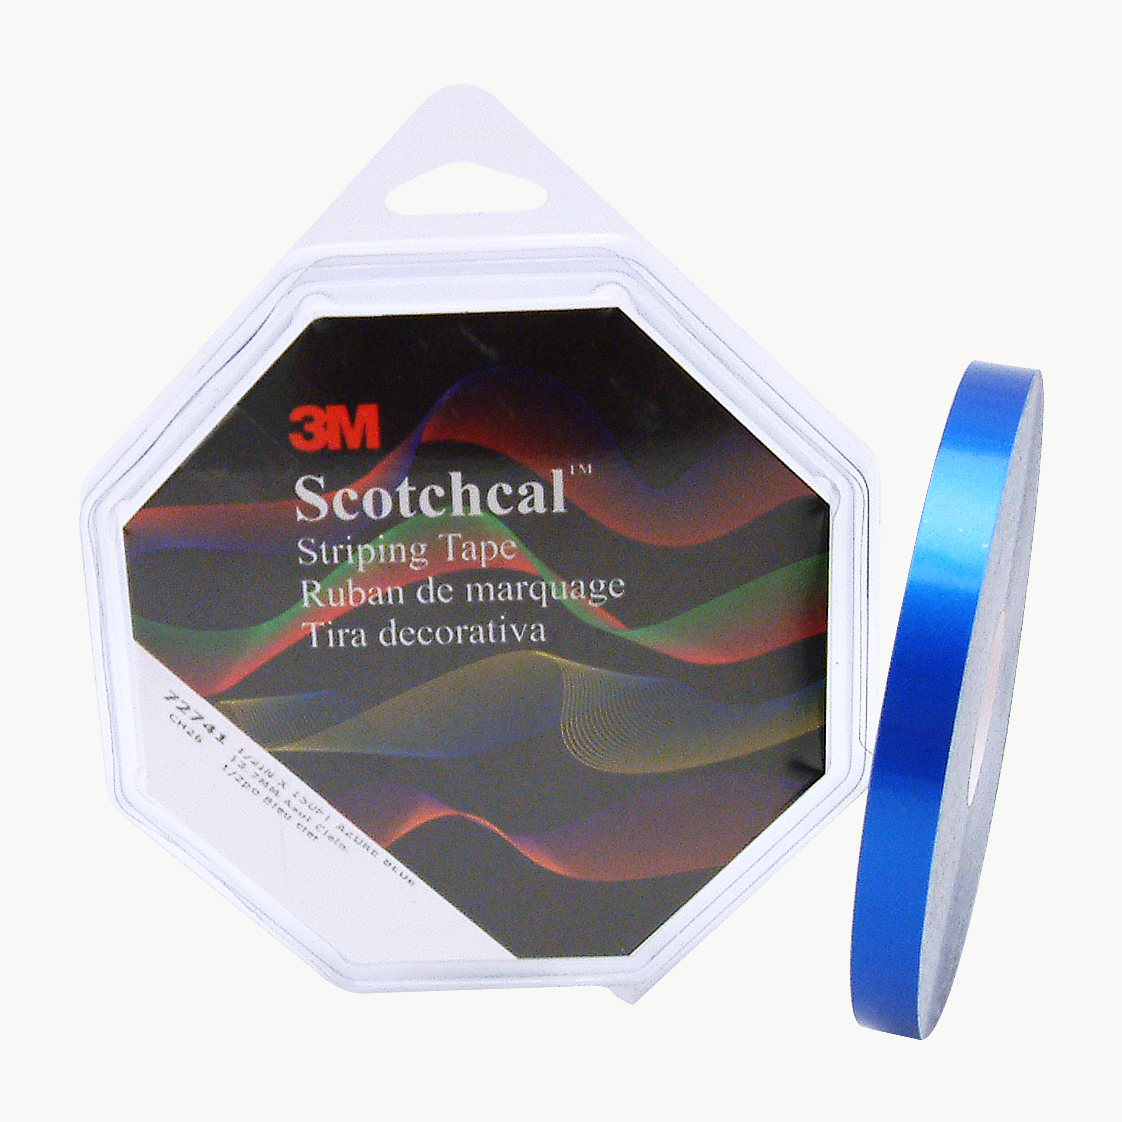 3M Scotchcal Striping Tape